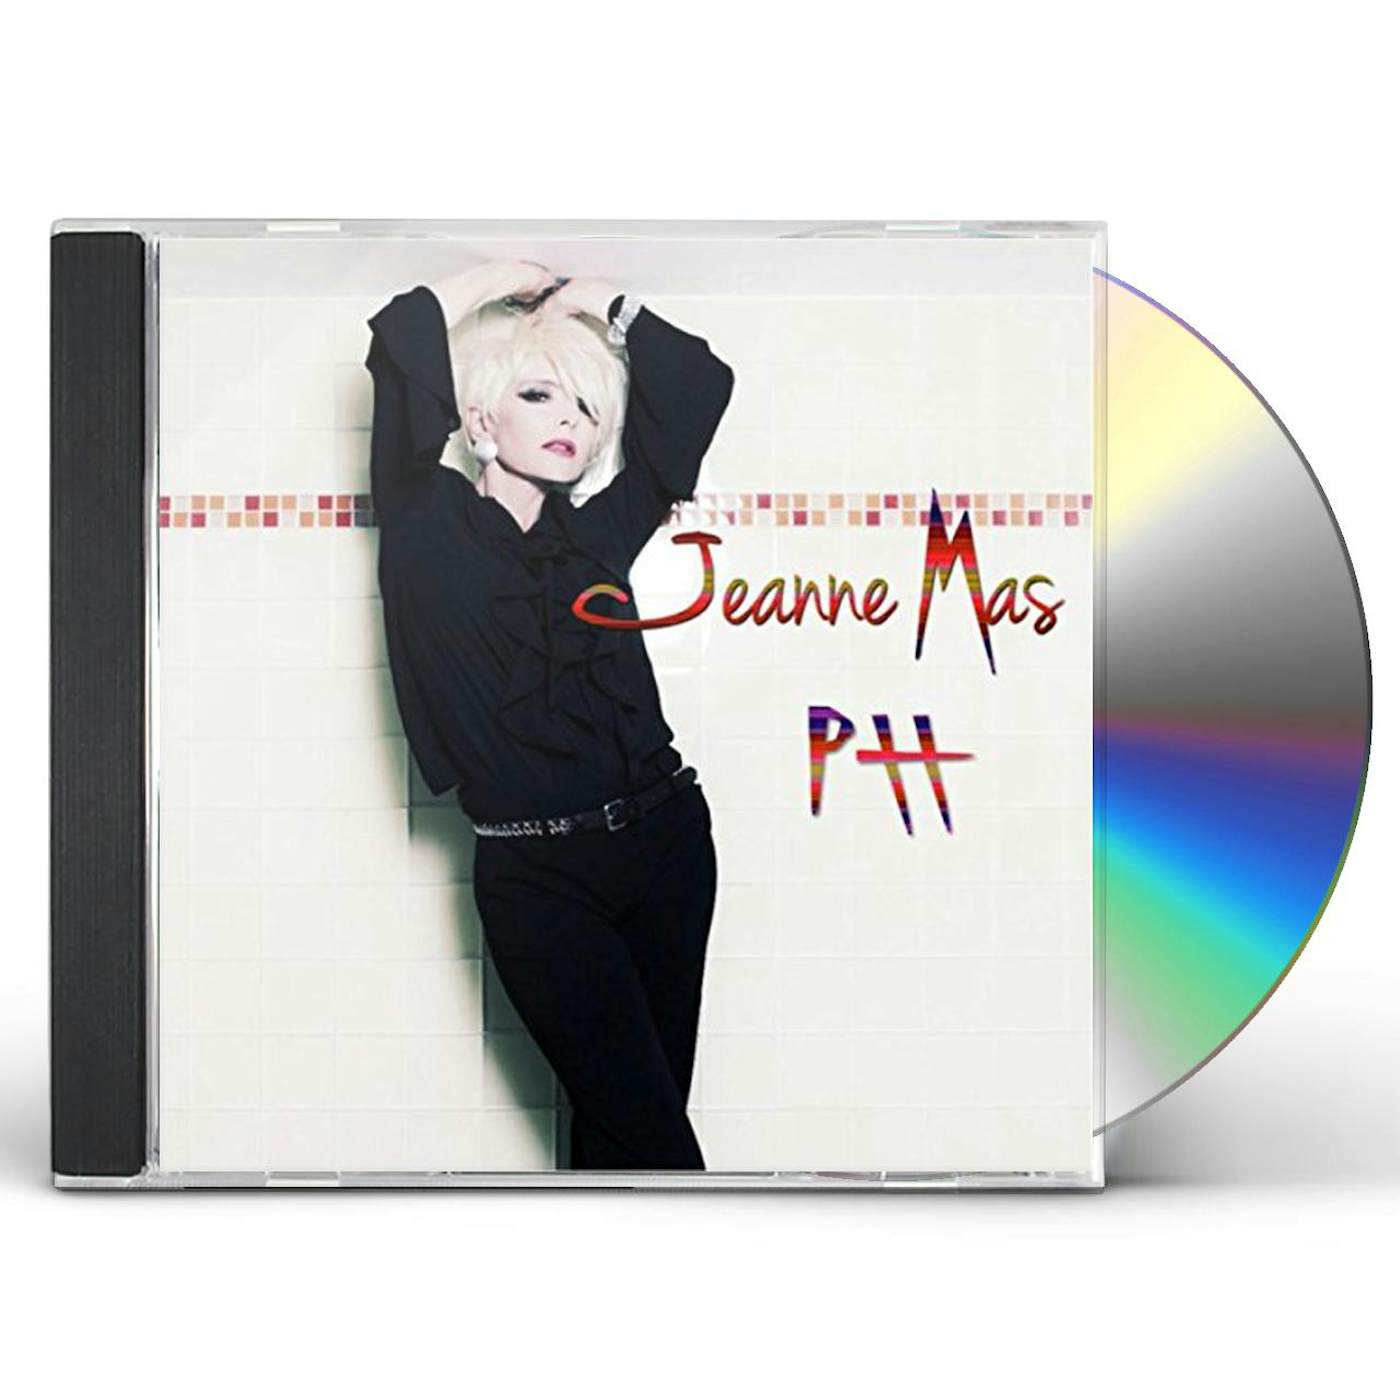 Jeanne Mas PH CD